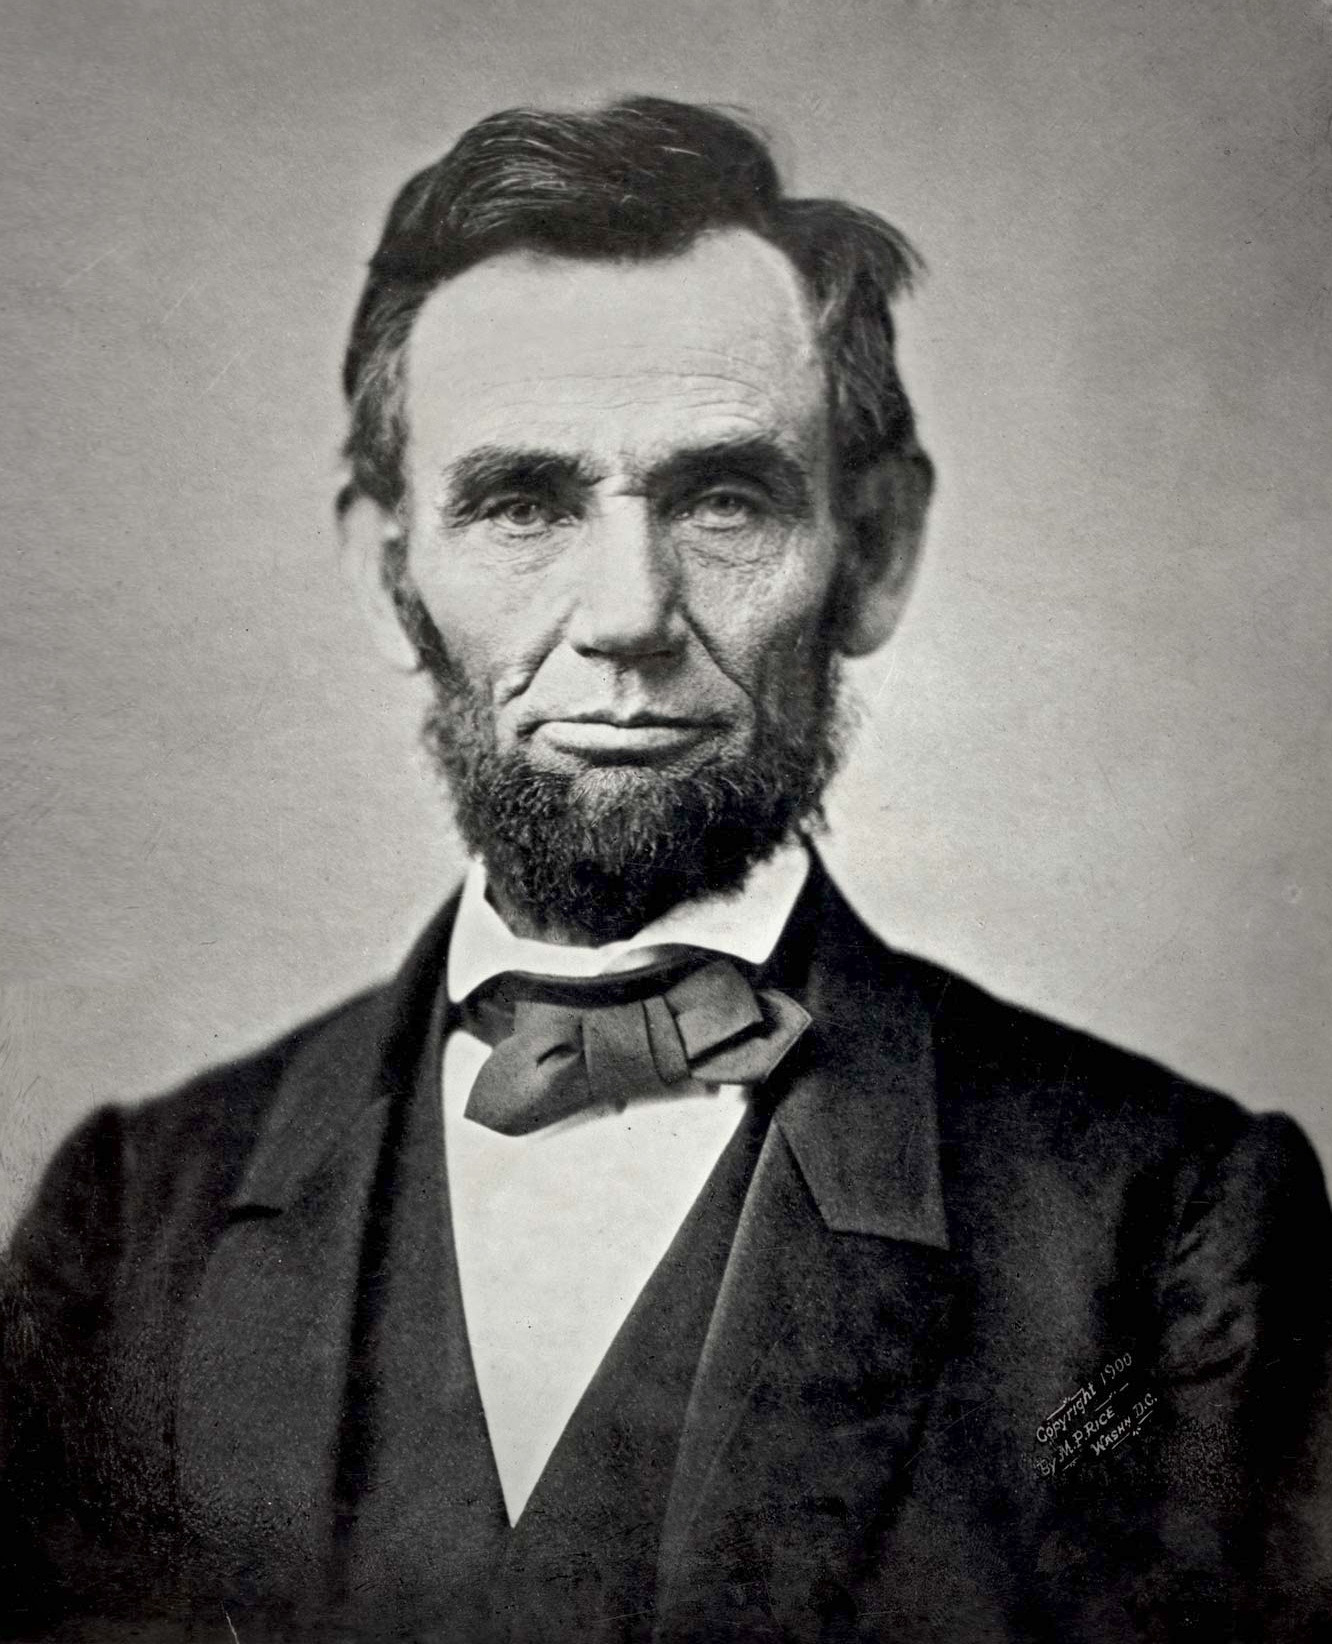 Abraham Lincoln’s profile image